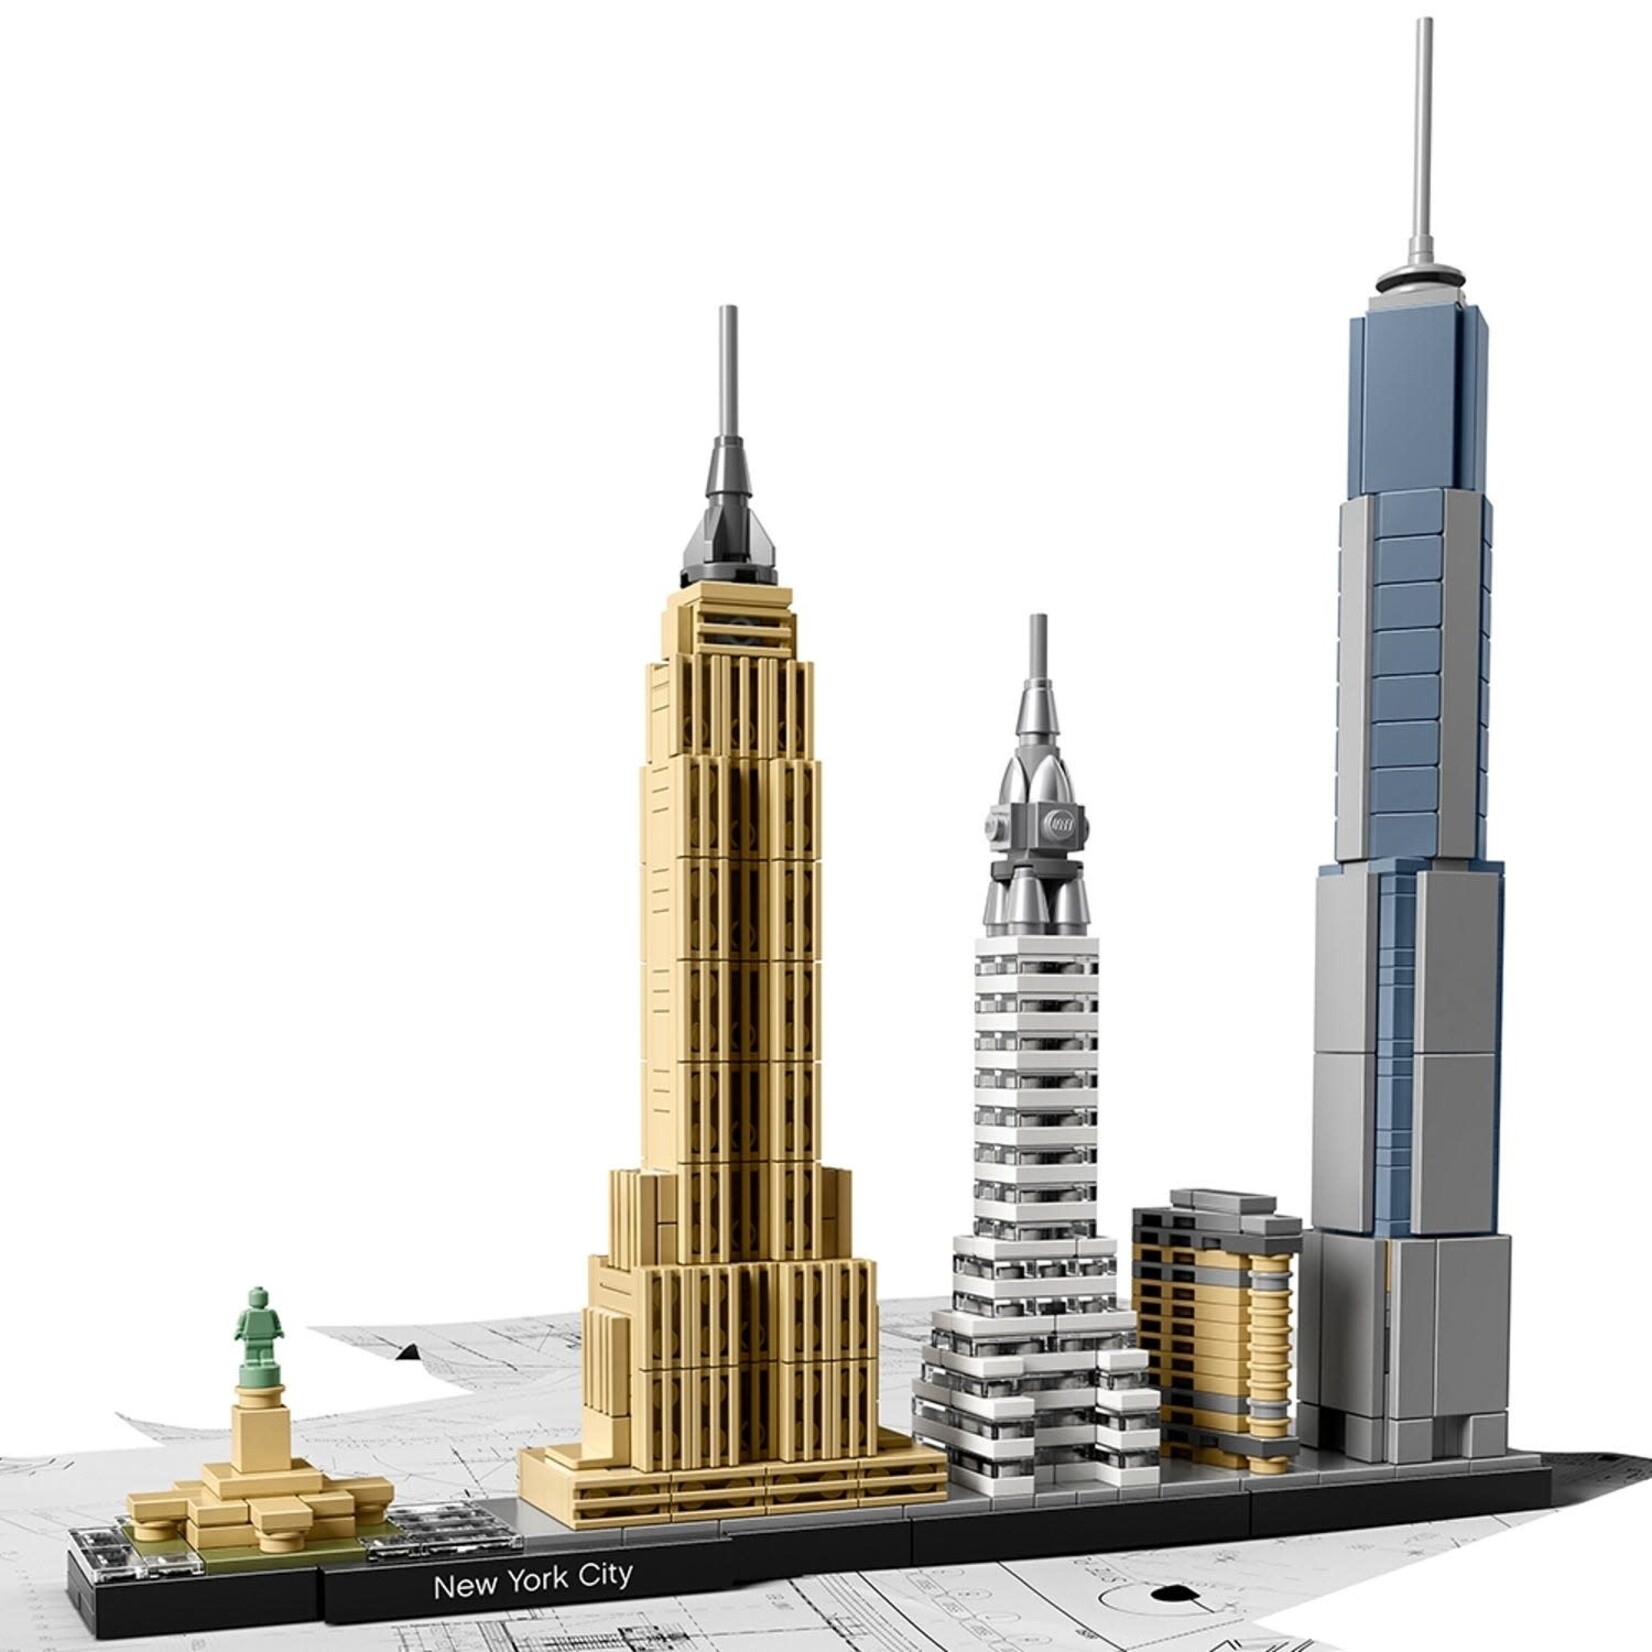 Lego Lego 21028 Architecture - New York